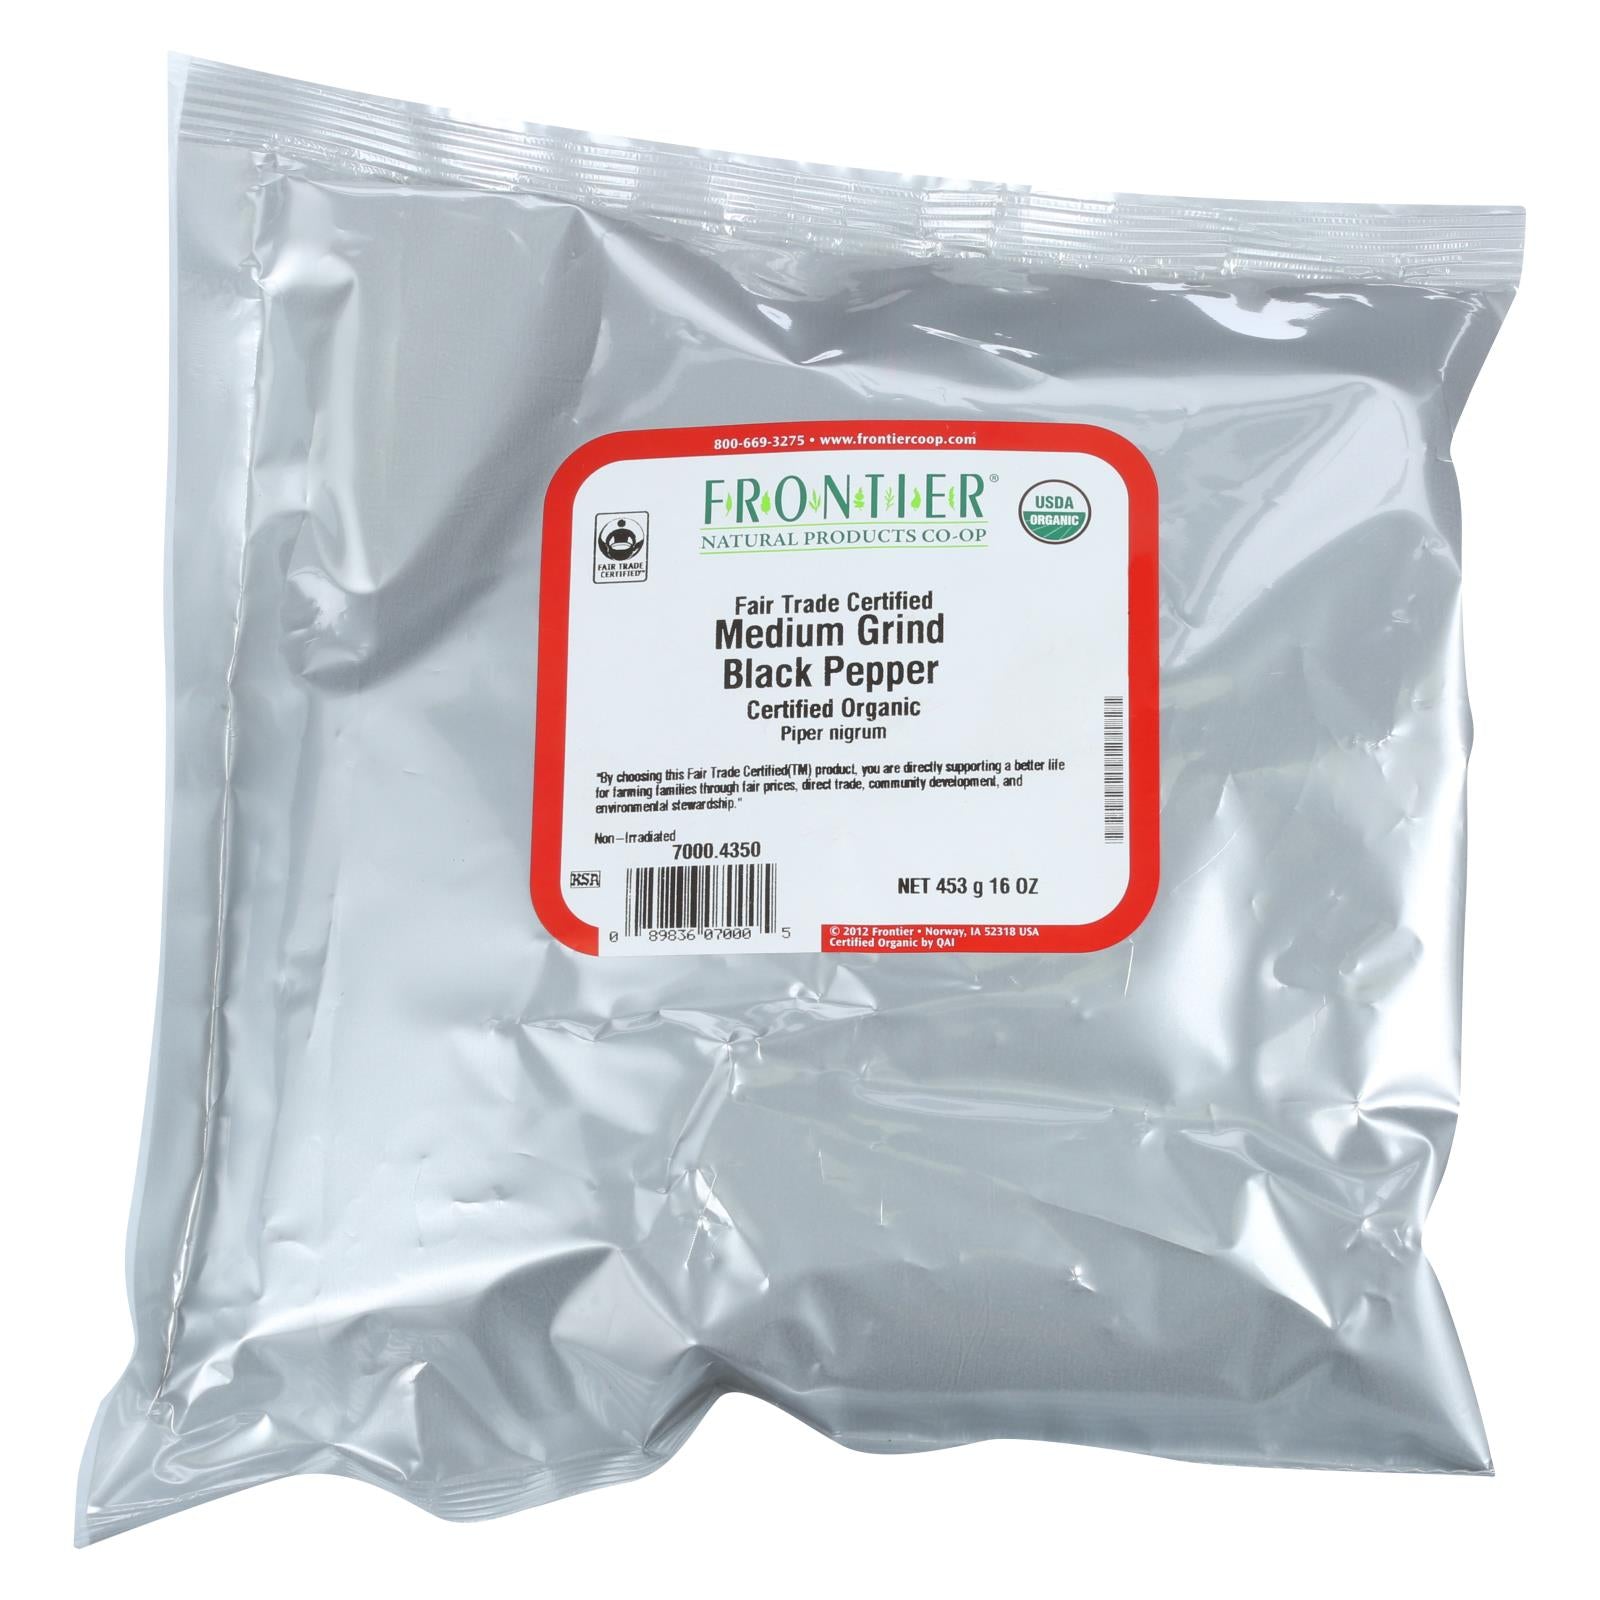 Frontier Herb Pepper Organic Fair Trade Certified Black Medium Grind - Single Bulk Item - 1lb